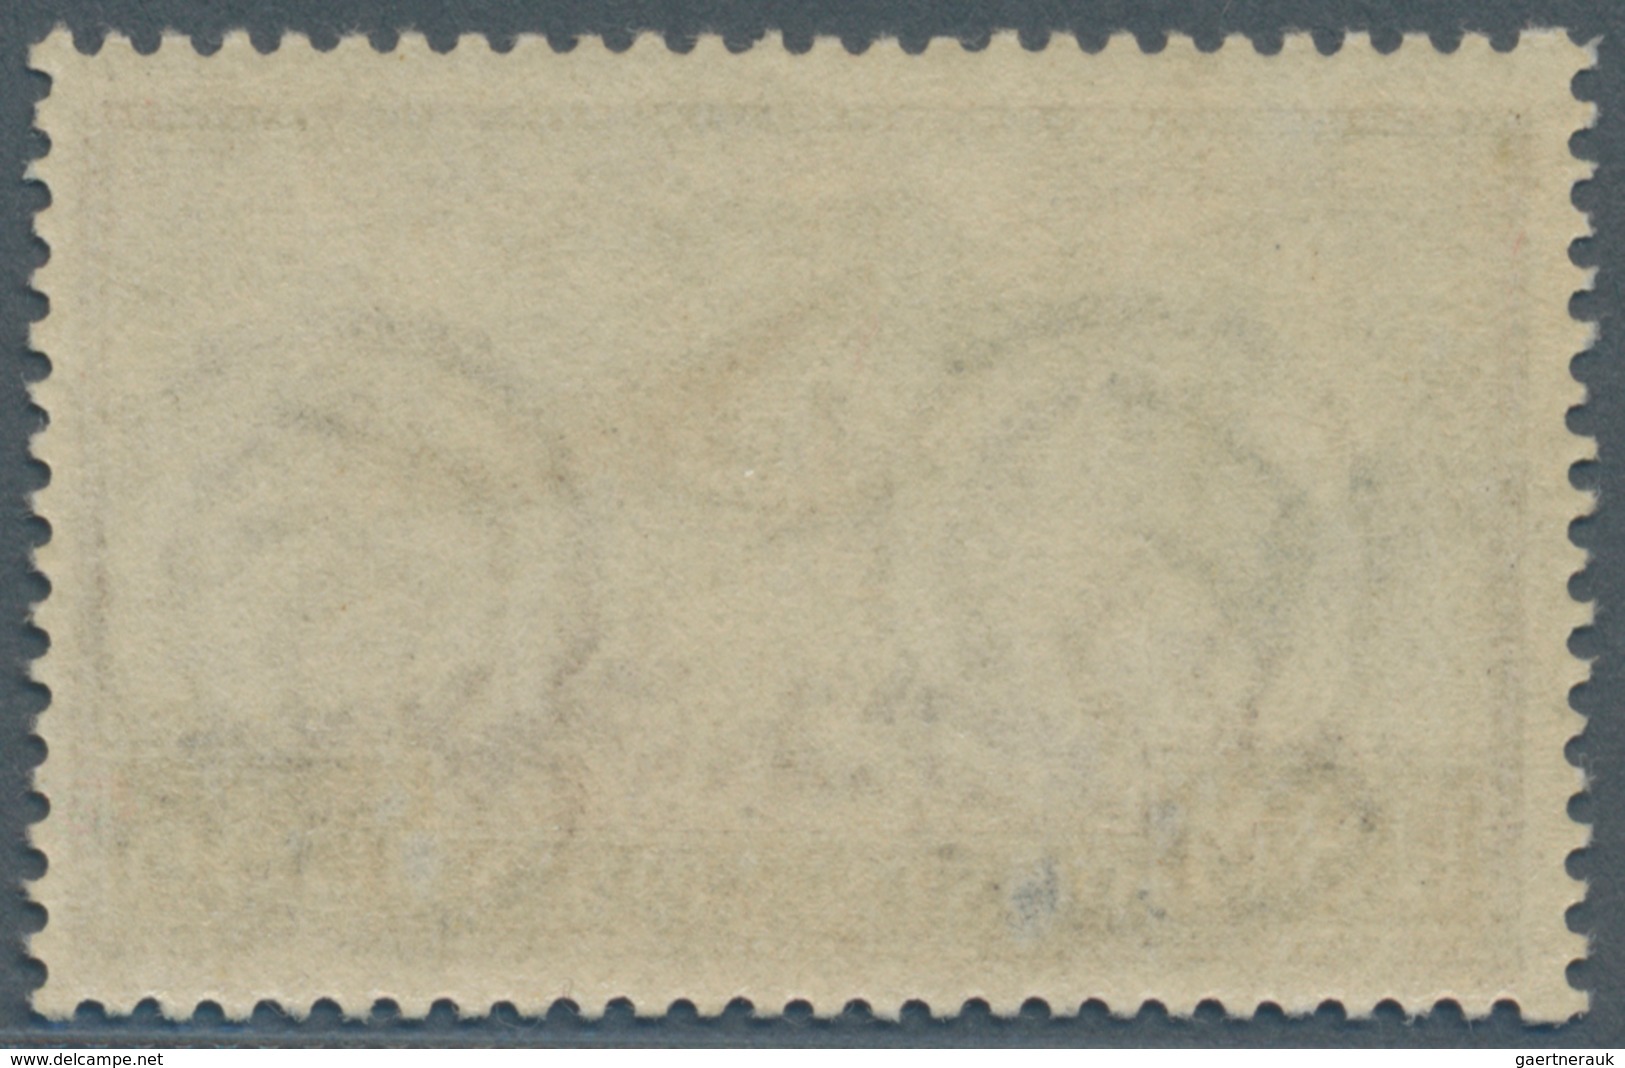 San Marino: 1951, 1000 Lire Airmail Stamp, Mint Never Hinged - Neufs